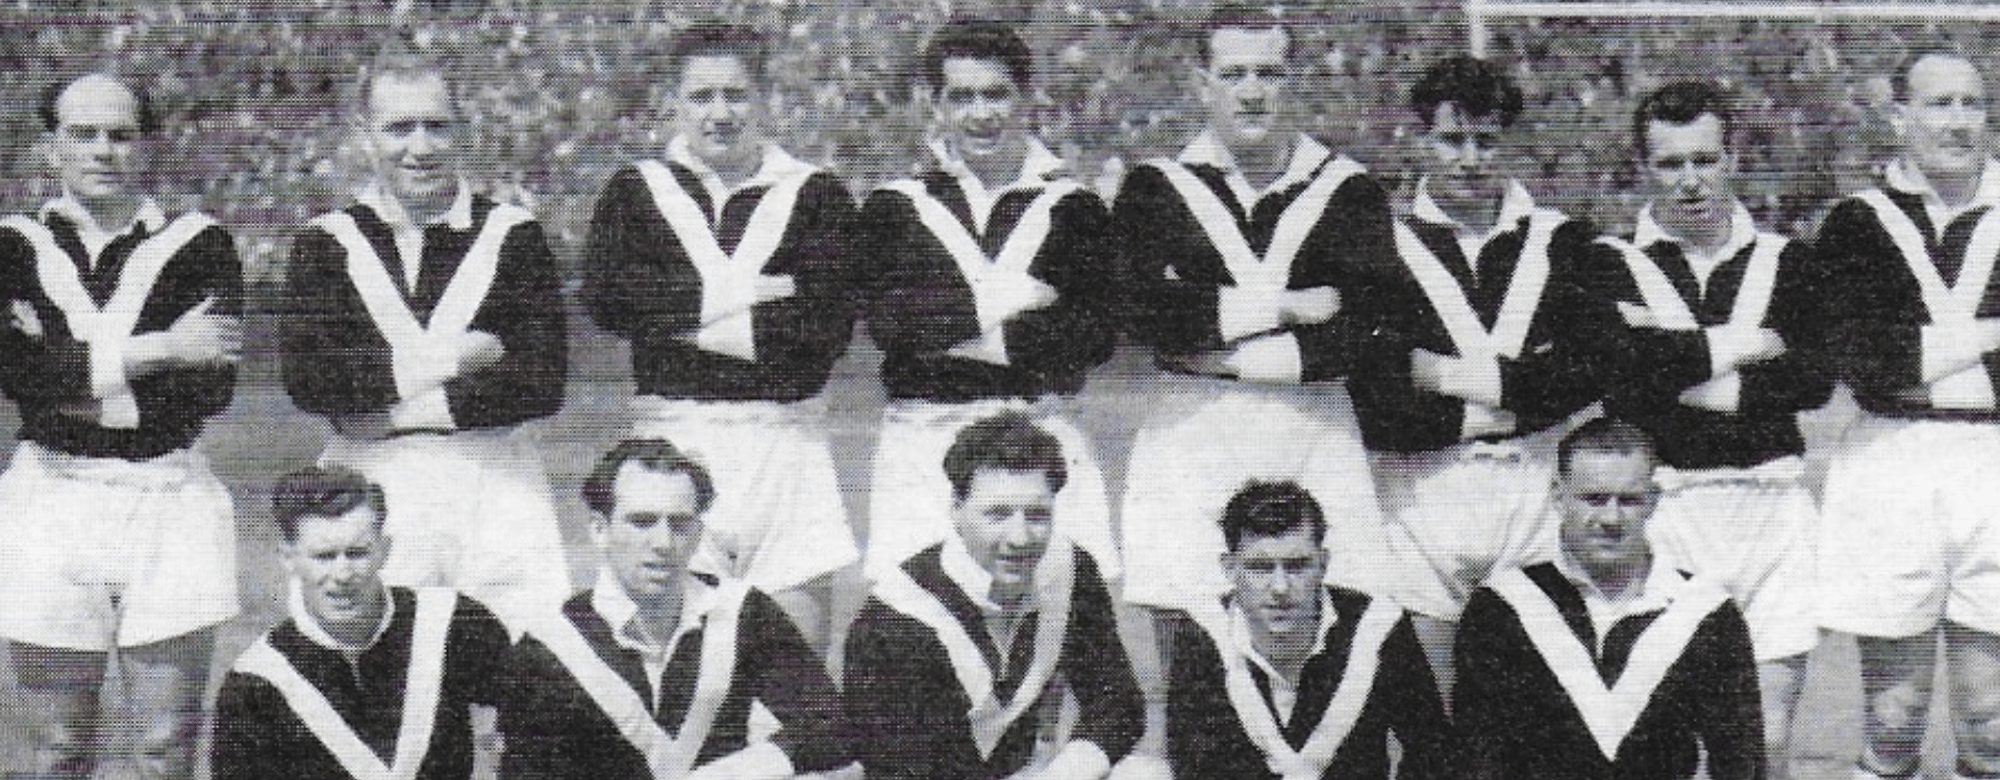 Hull FC’s 1956 Championship Winning Campaign